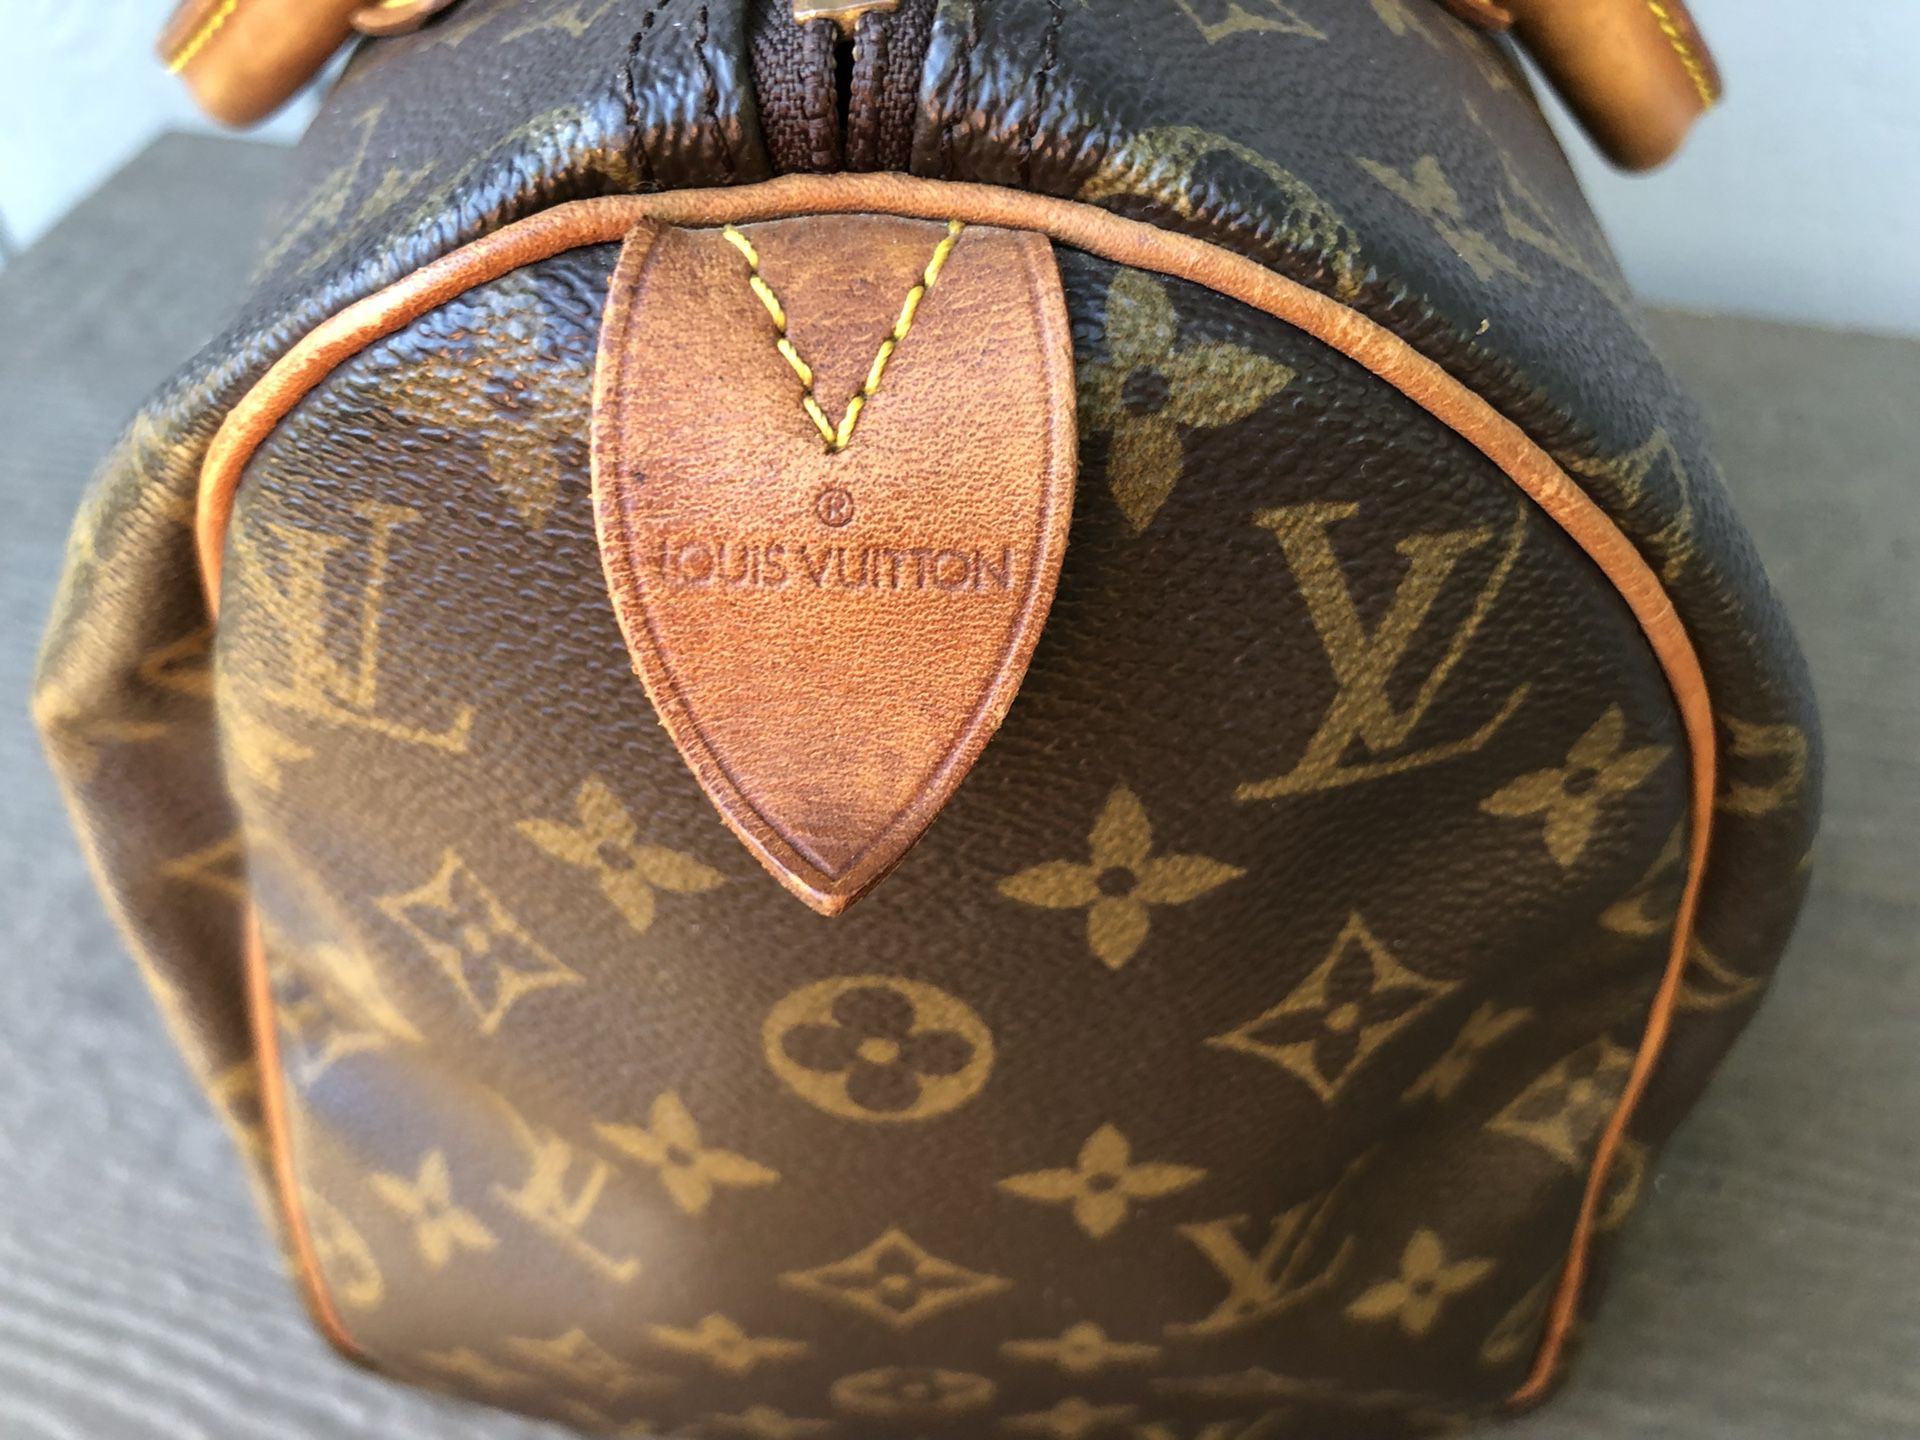 Louis Vuitton-Speedy 30 for Sale in Kirkland, WA - OfferUp